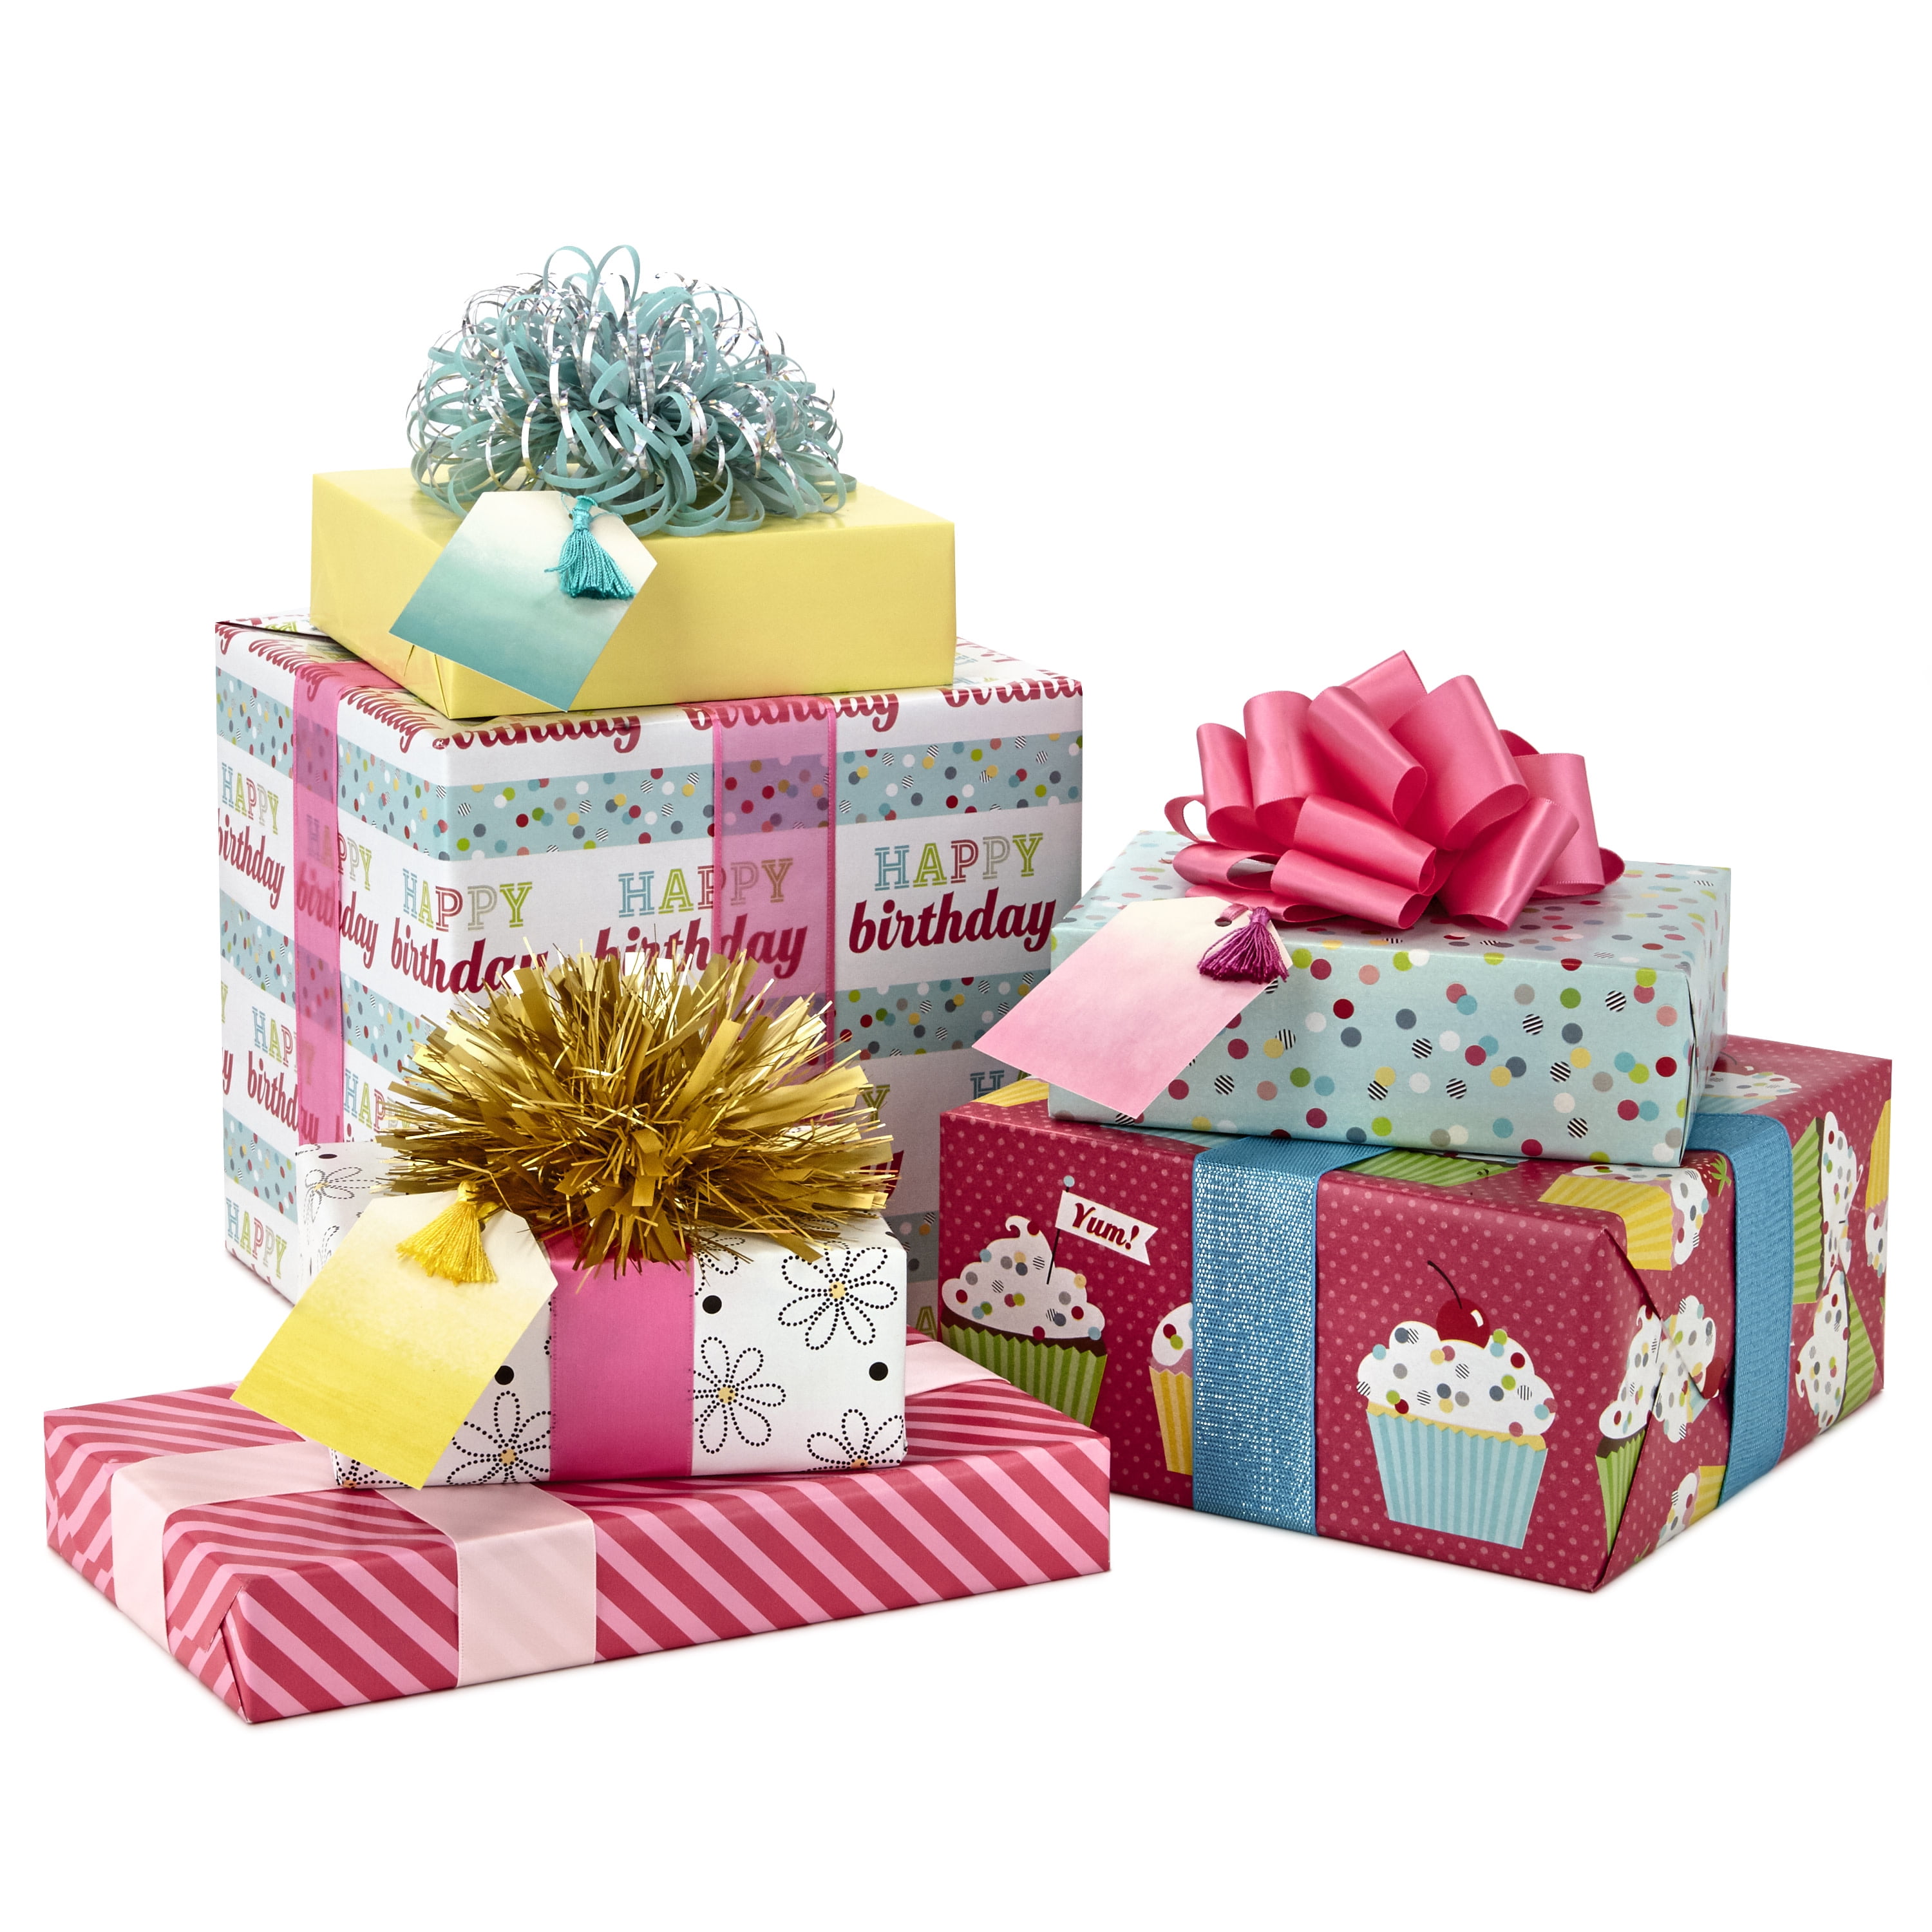 KALAN Adult Gift Wrap Paper CUCUMBERS BETTER THAN 24" x 36" Sheet & 2 Gift Cards 